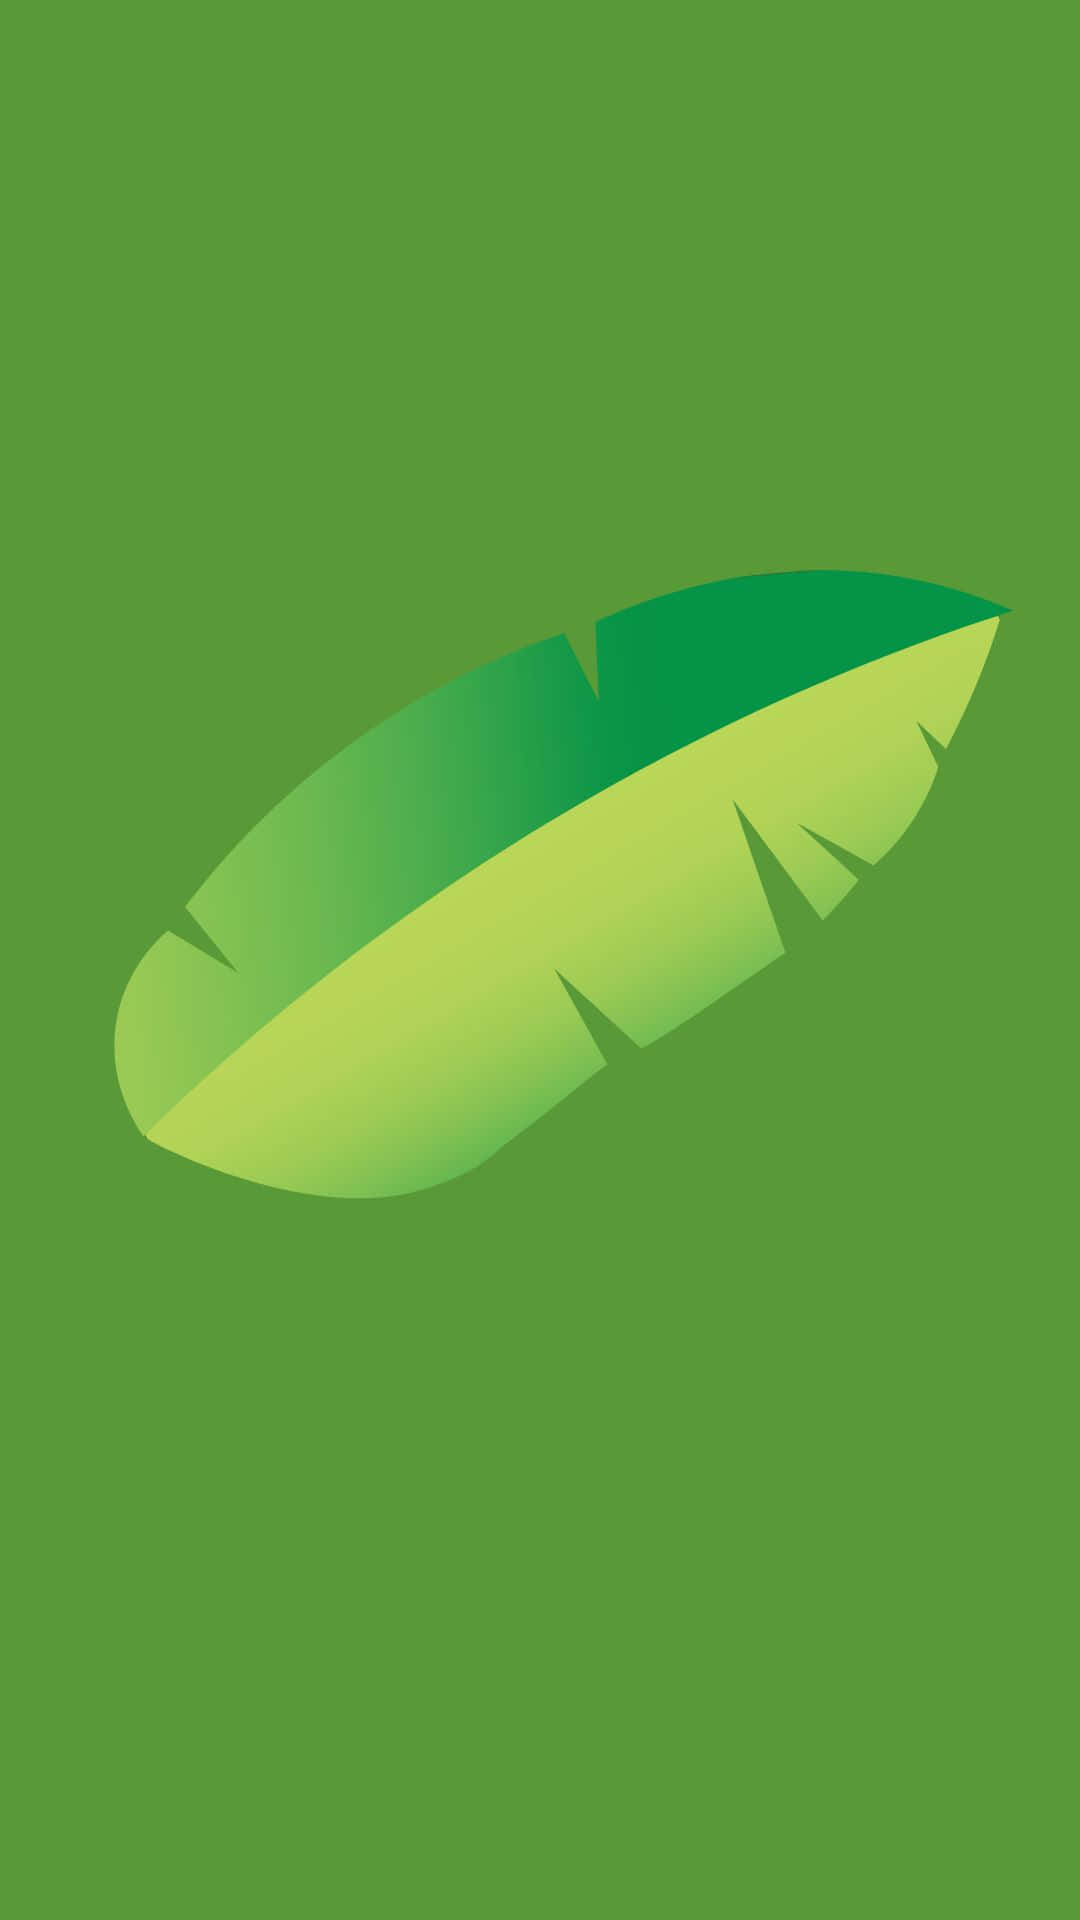 A Green Leaf On A Green Background